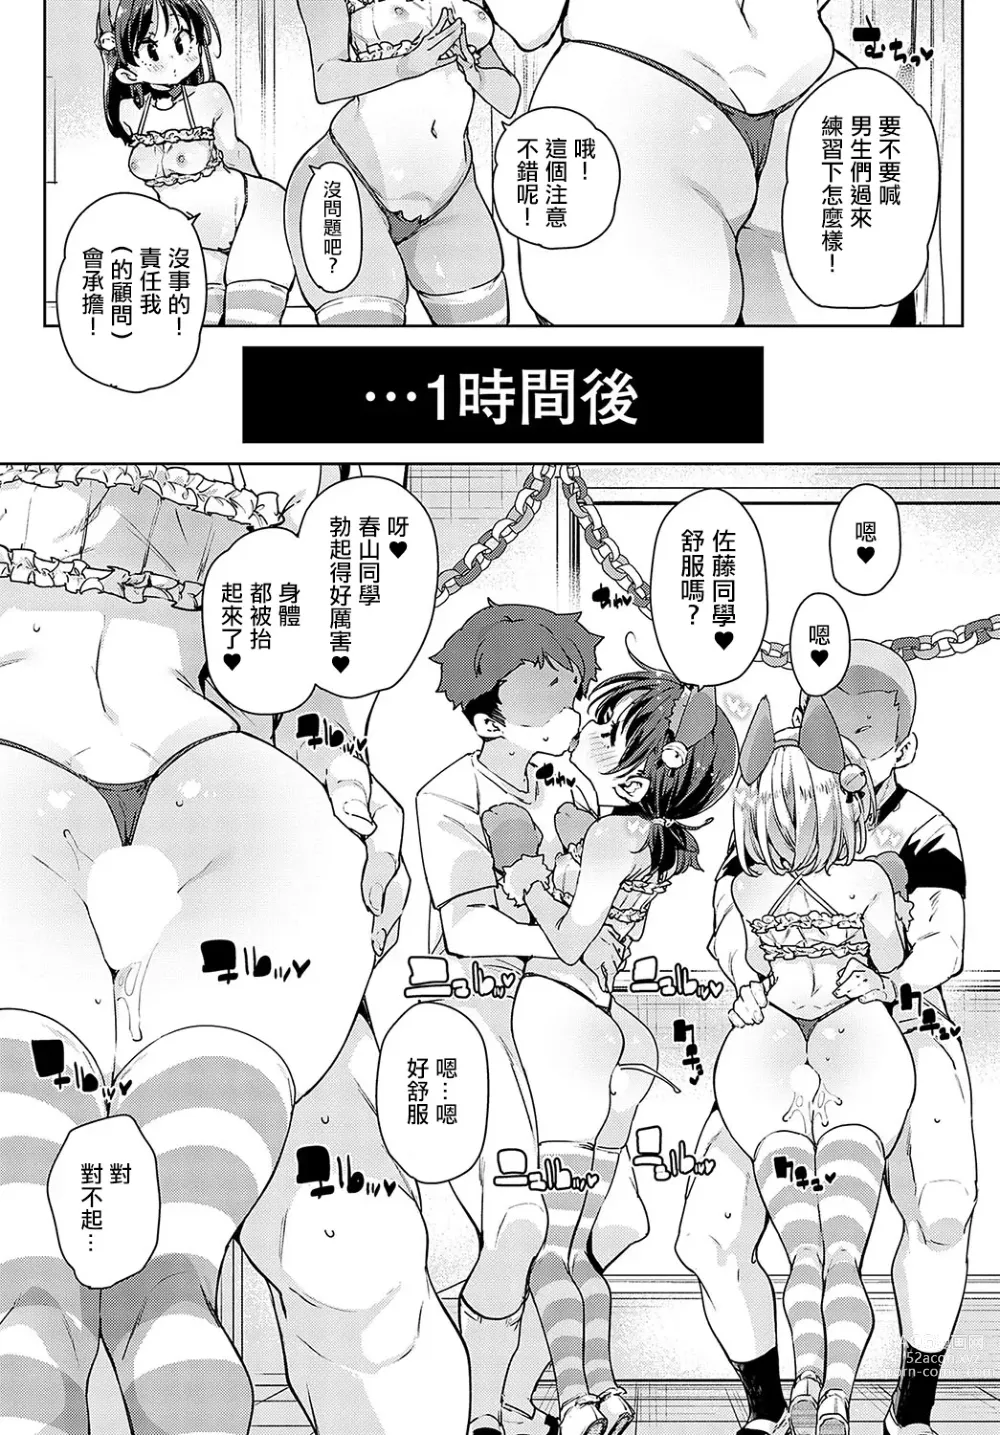 Page 3 of manga Echiechi Seichou Kiroku  6